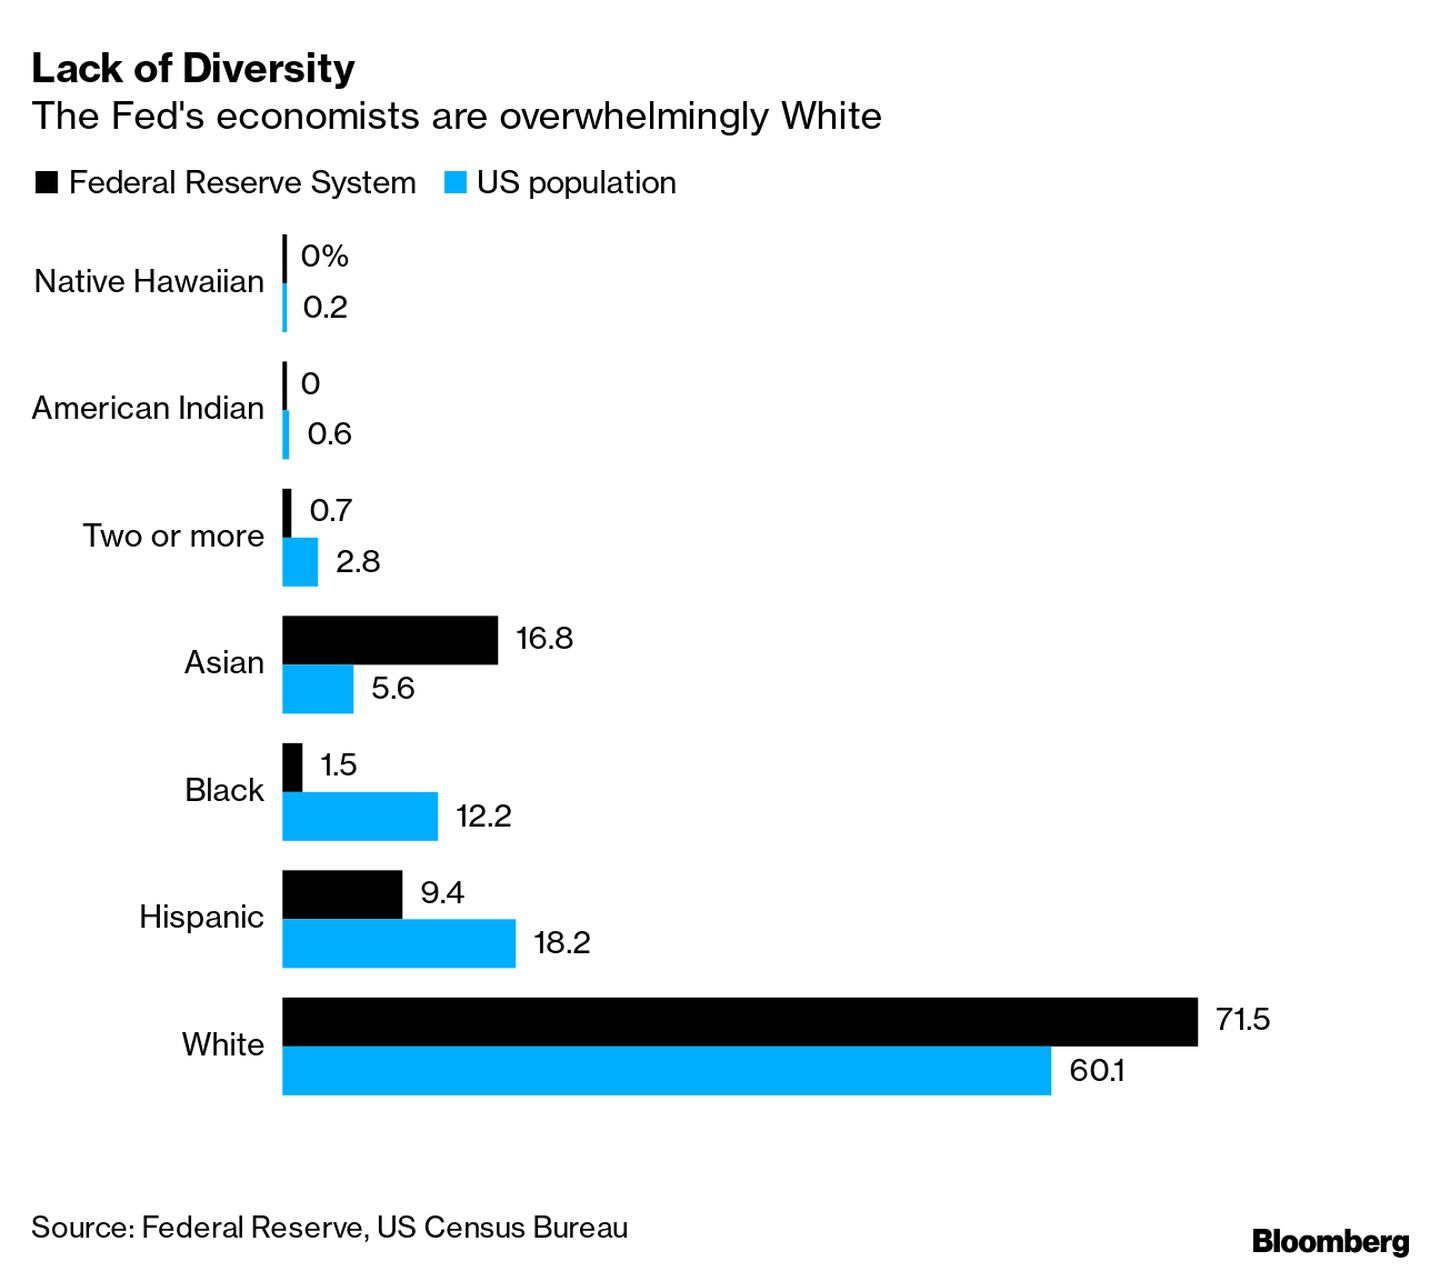 Economistas do Fed são predominantemente brancosdfd